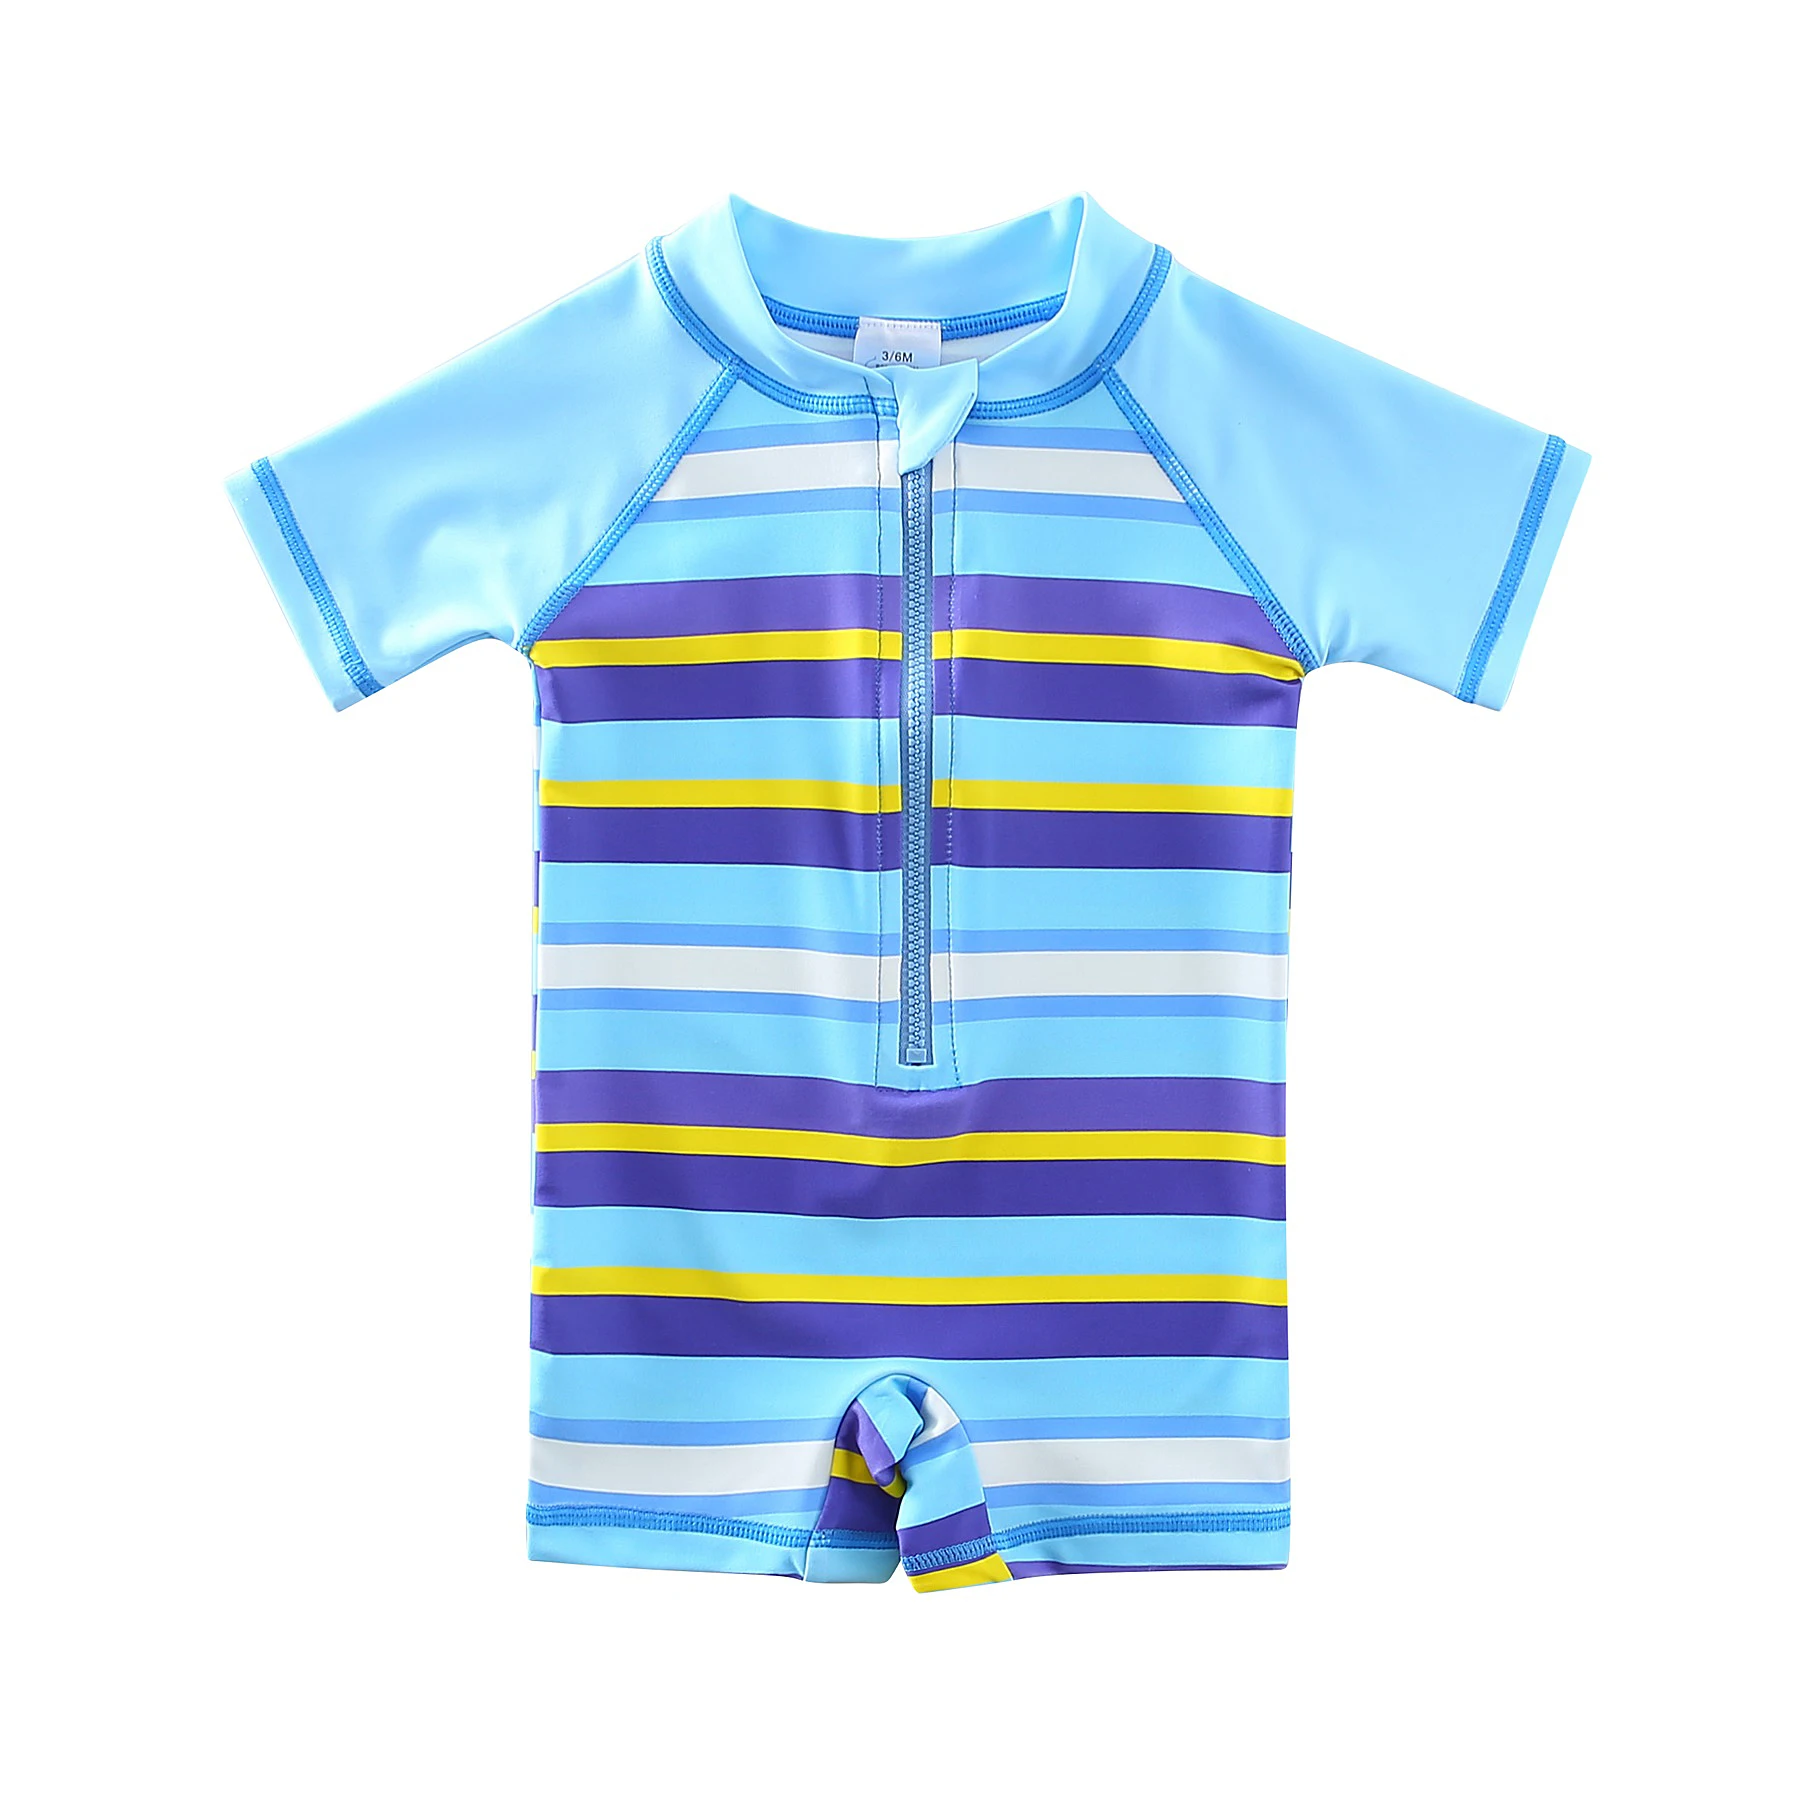 Wishere One-piece Swimsuit for Children Baby Boy Bathing Suit Short Sleeve Swimwear UPF50+ Kid Beachwear Infant Sunsuit images - 6